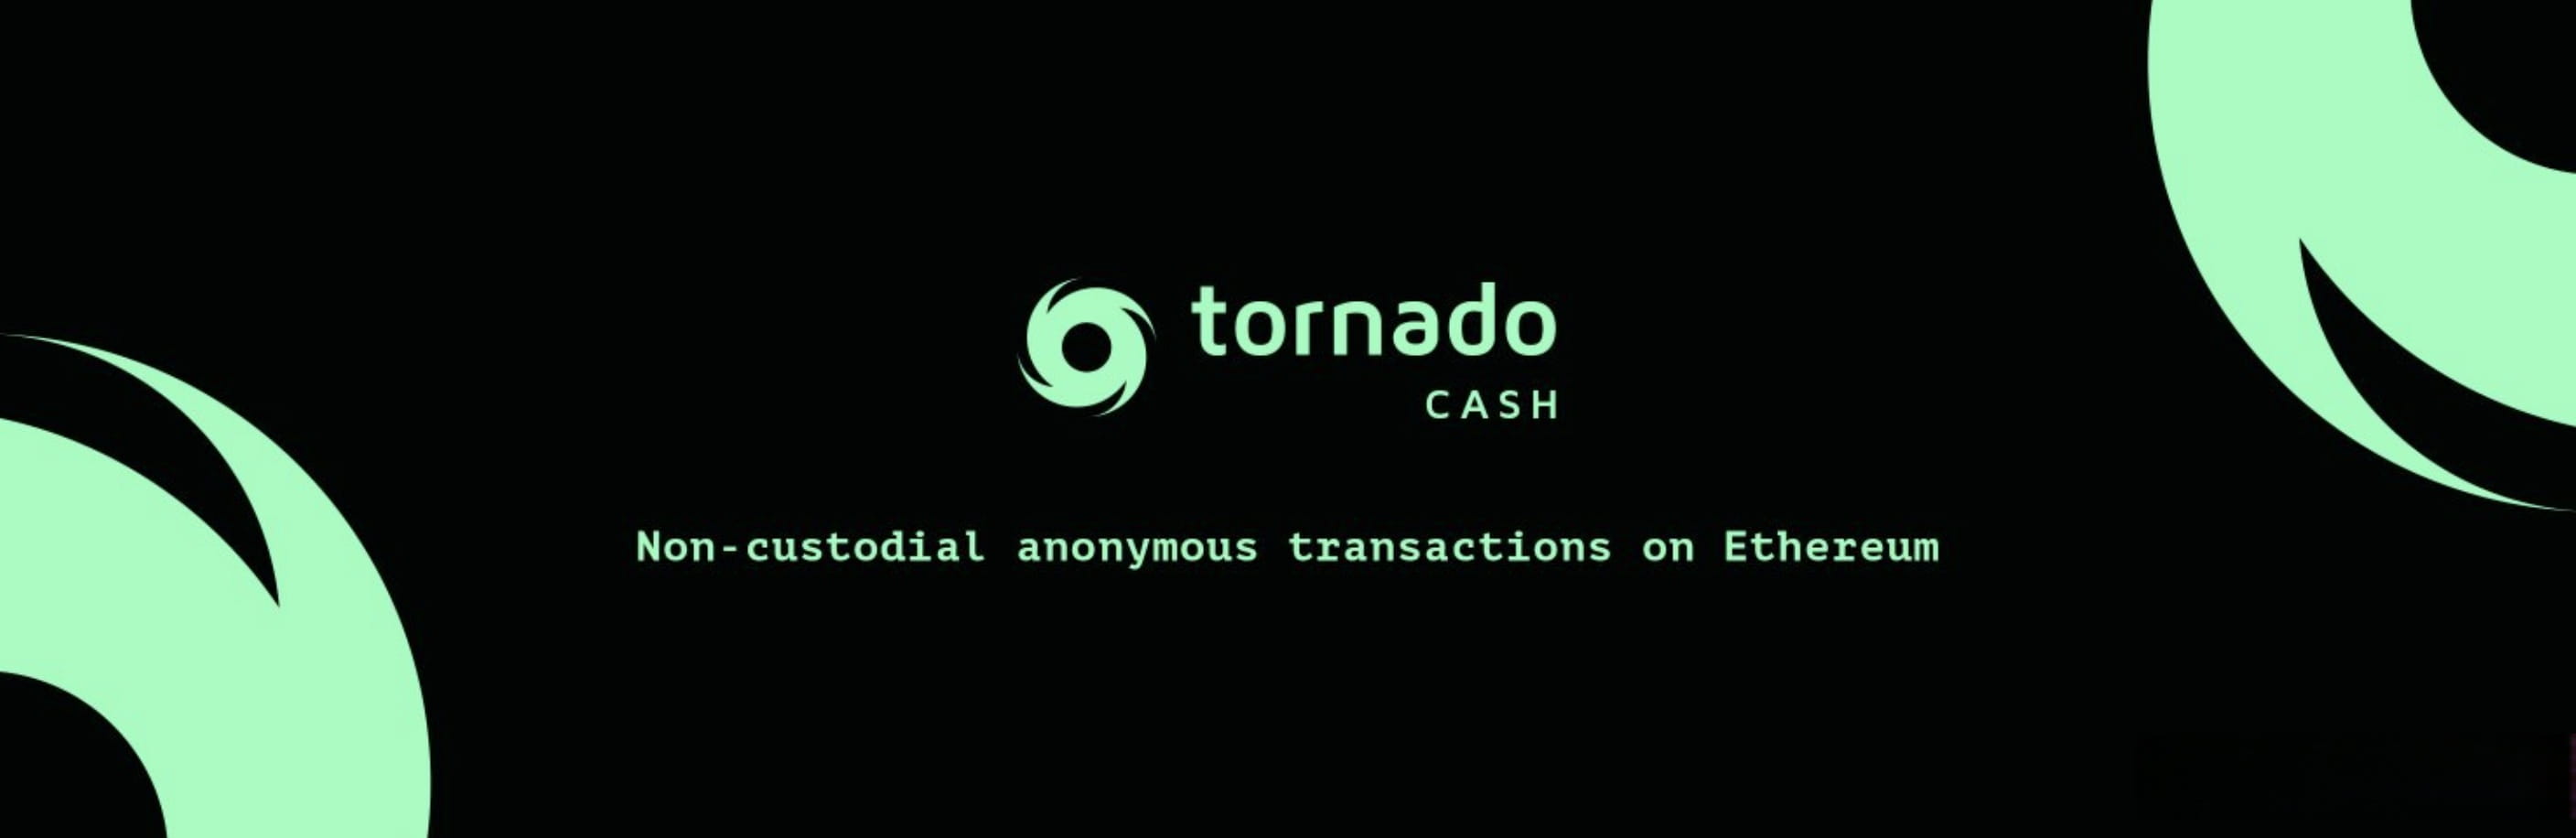 Tornado,Cash是如何帮助用户洗掉交易痕迹的